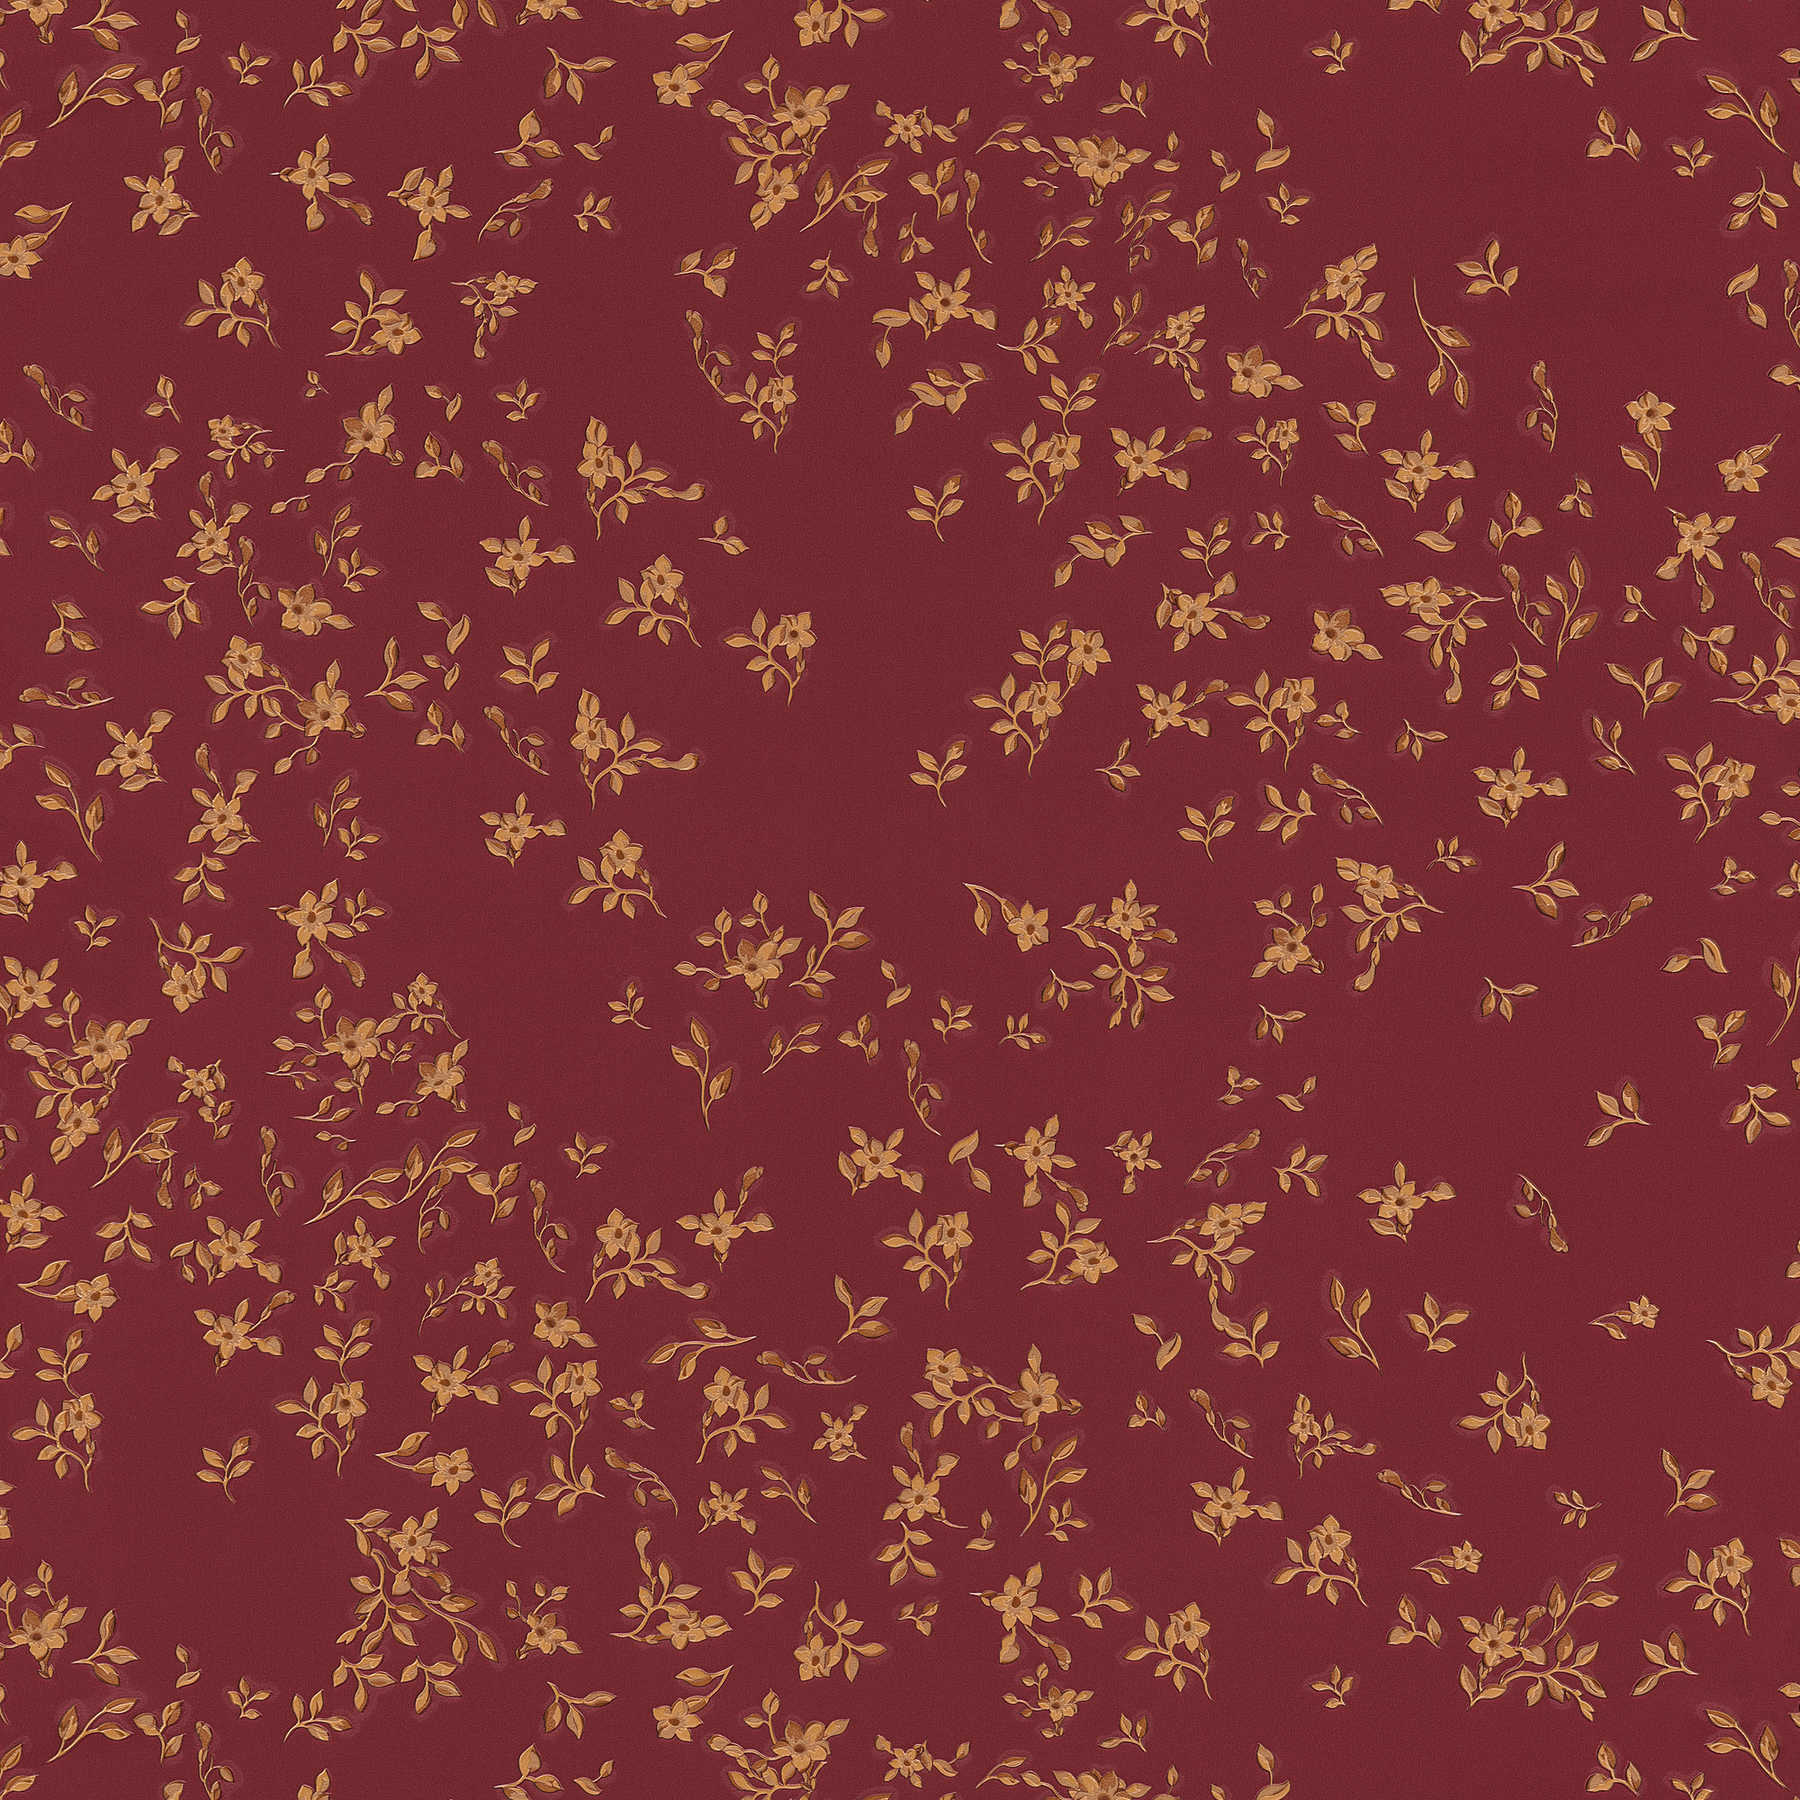         Rote VERSACE Tapete mit Blümchen Muster – Rot, Gold, Braun
    